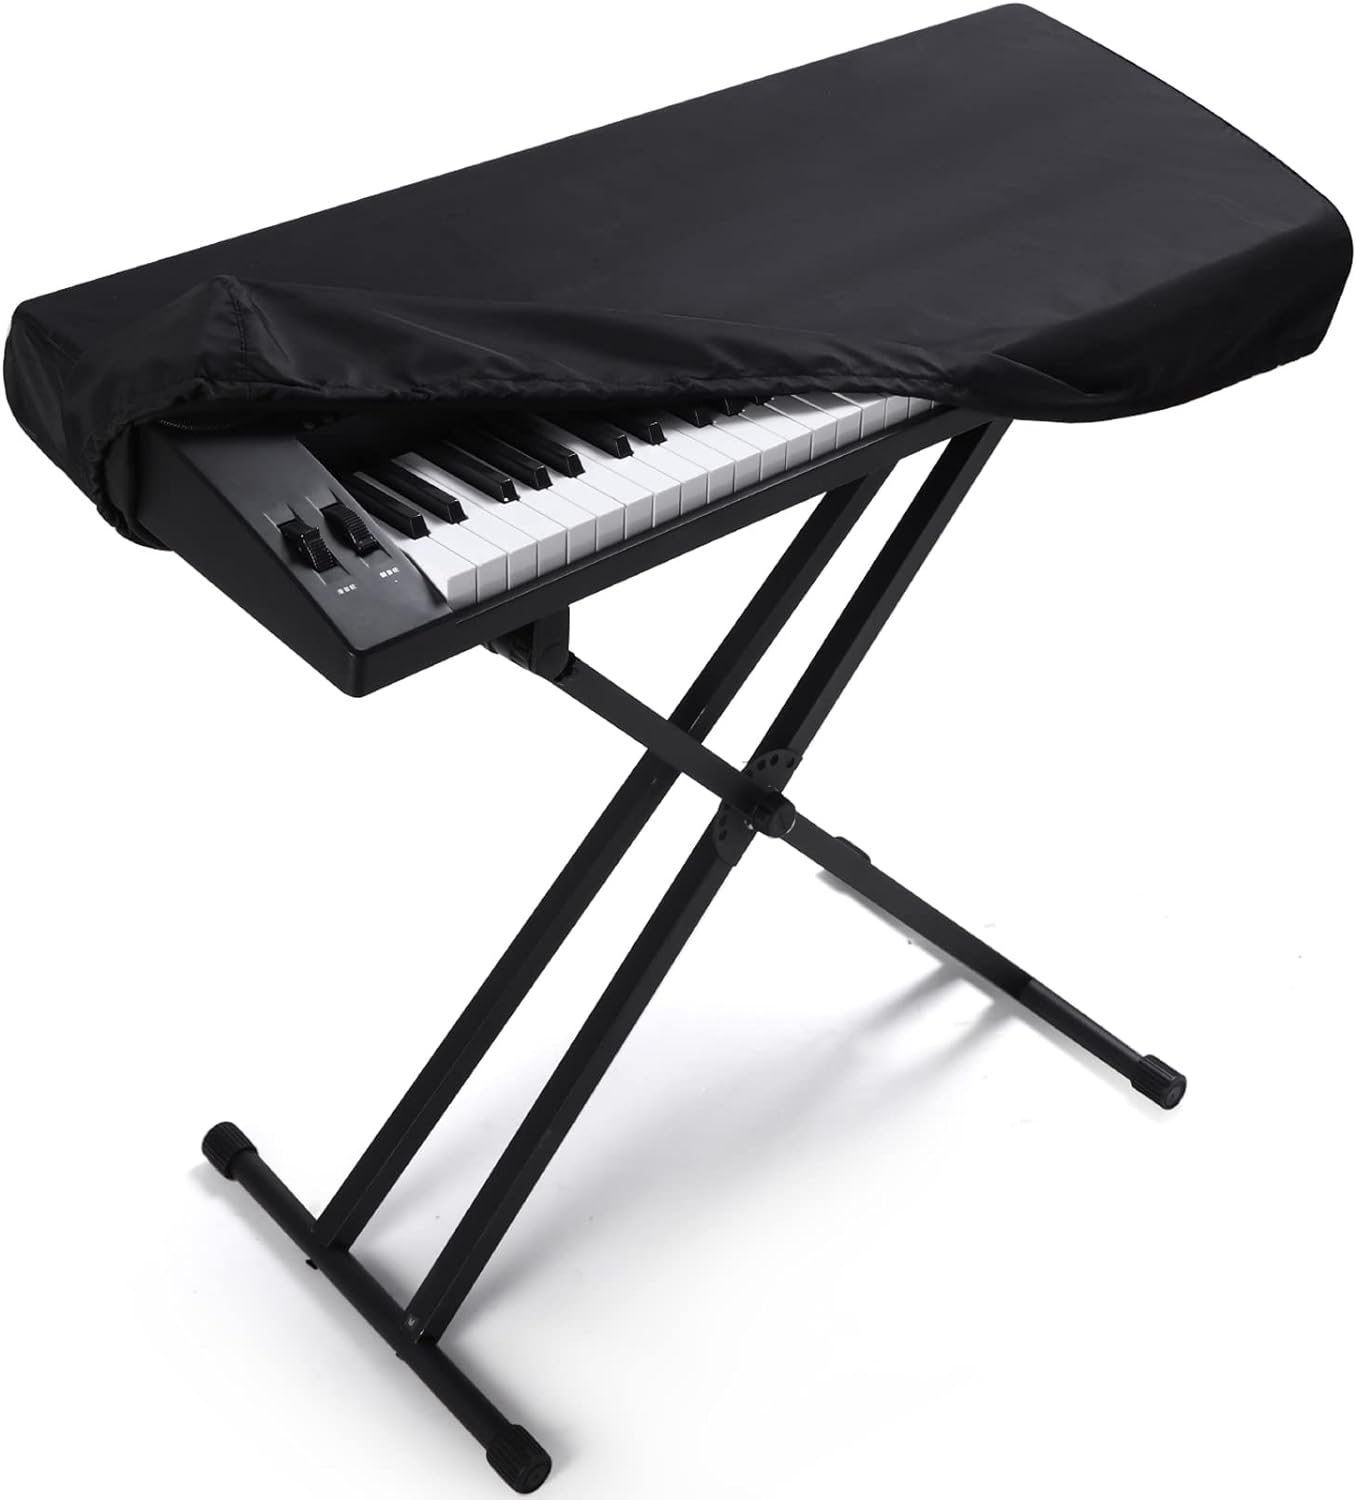 piano keyboard accessories